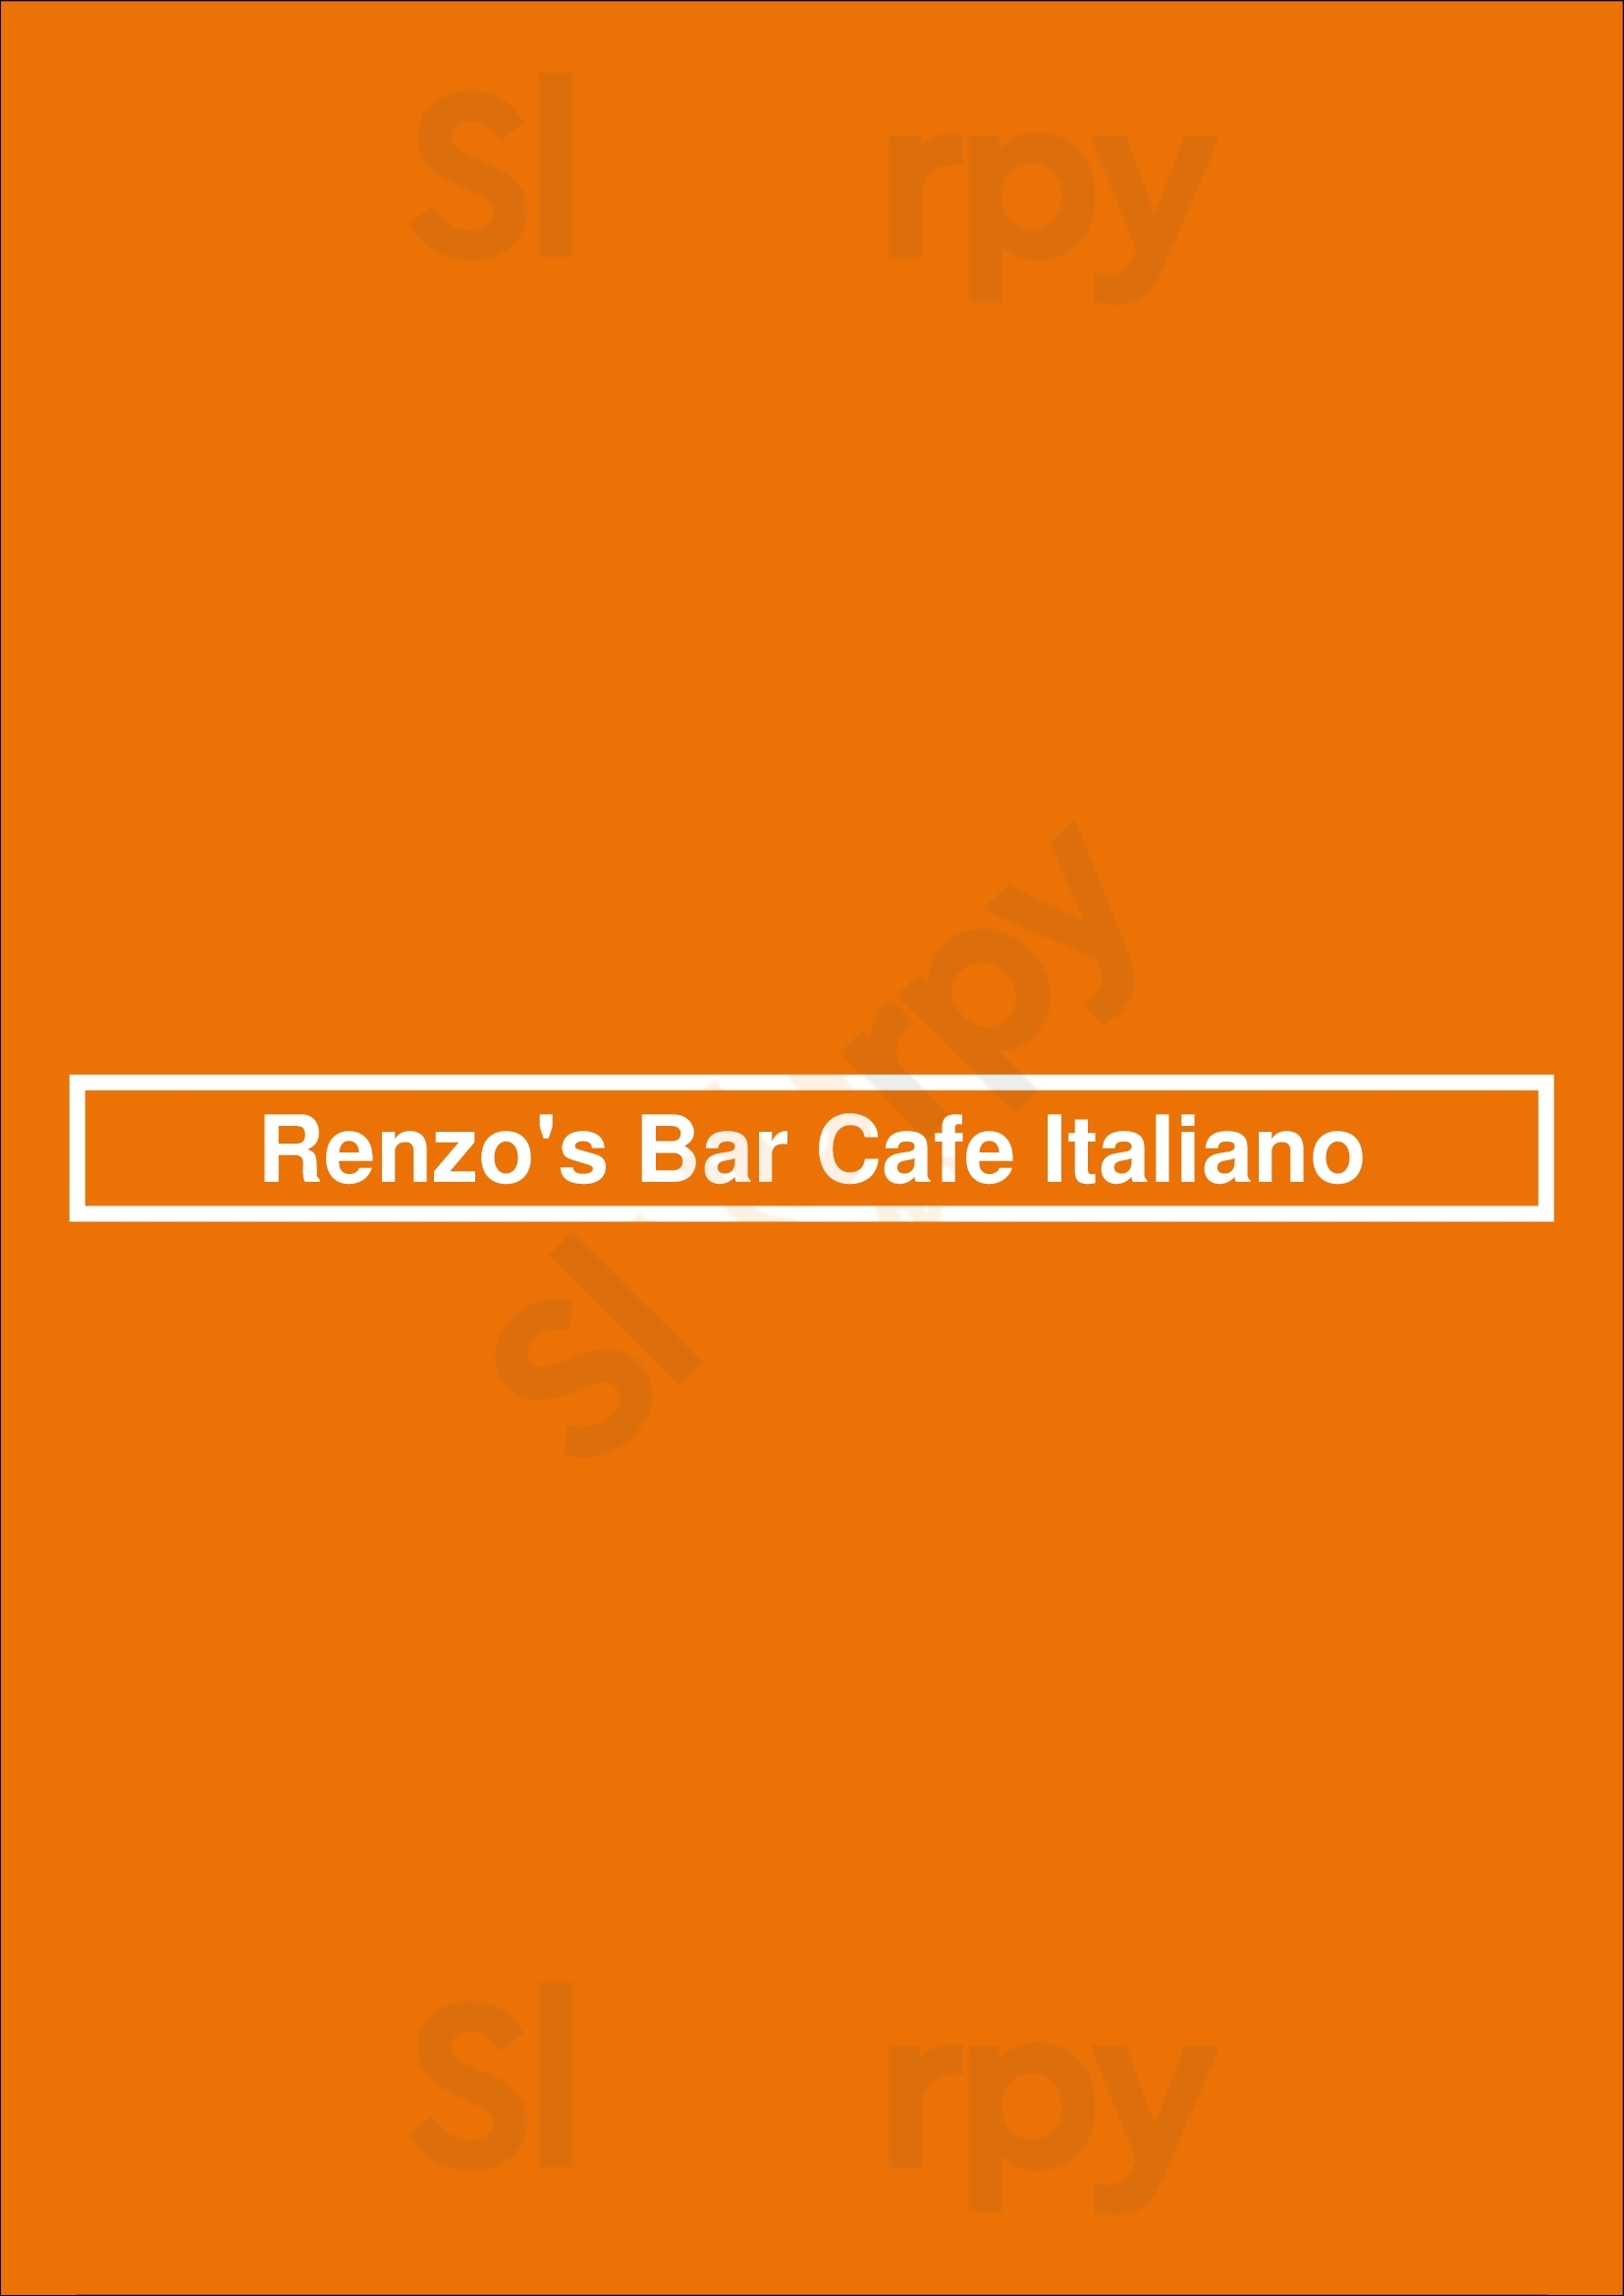 Renzo's Bar Cafe Italiano Melbourne Menu - 1